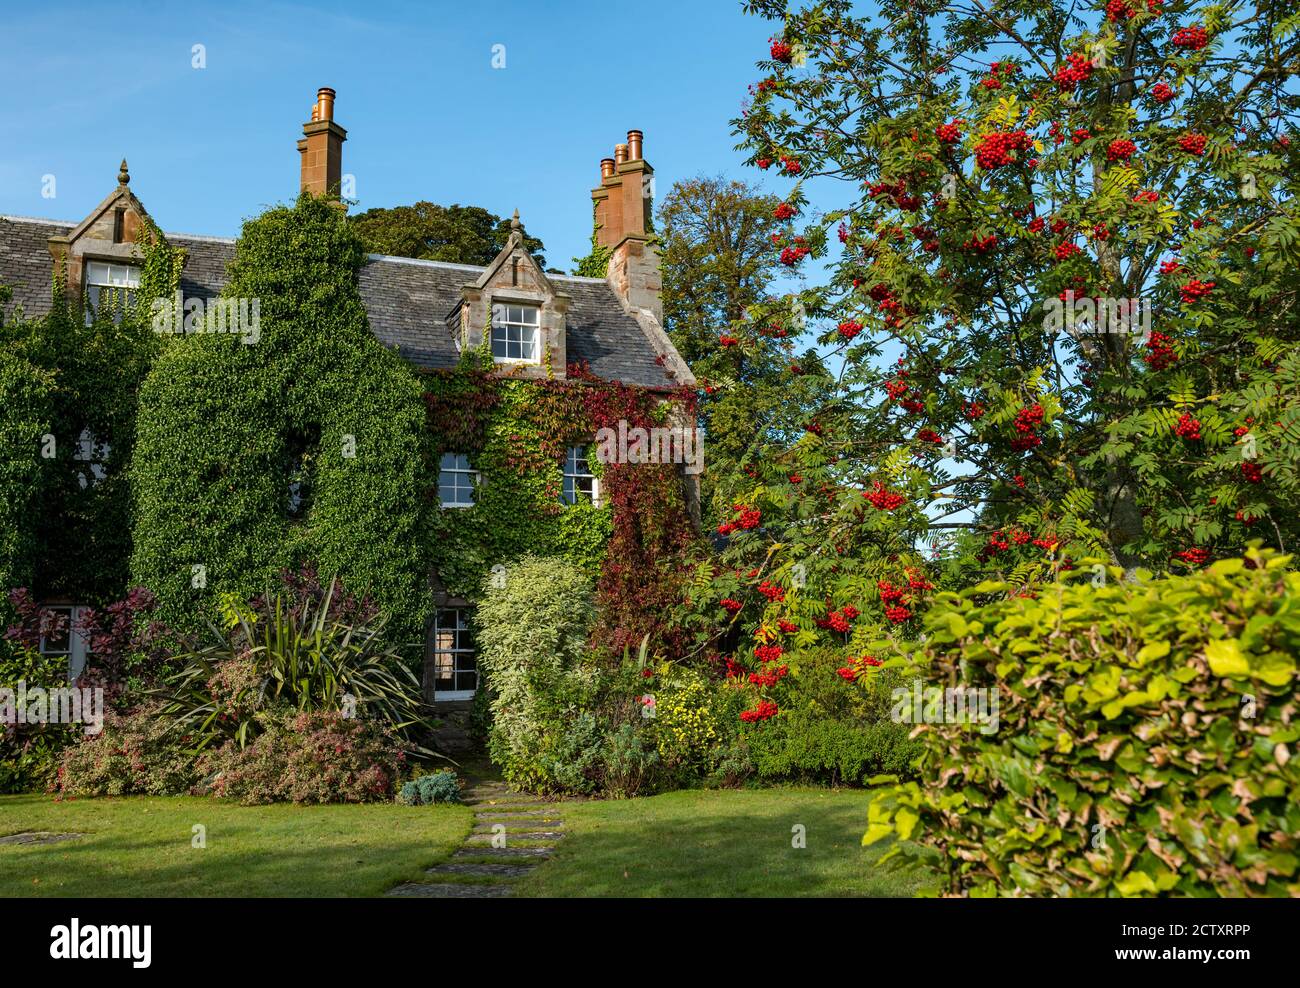 Viktorianisches Haus bedeckt mit Herbst roten Efeu & Berg Asche oder Eberesche Baumbeeren in Blüte, Dirleton Dorf, East Lothian, Schottland, Großbritannien Stockfoto